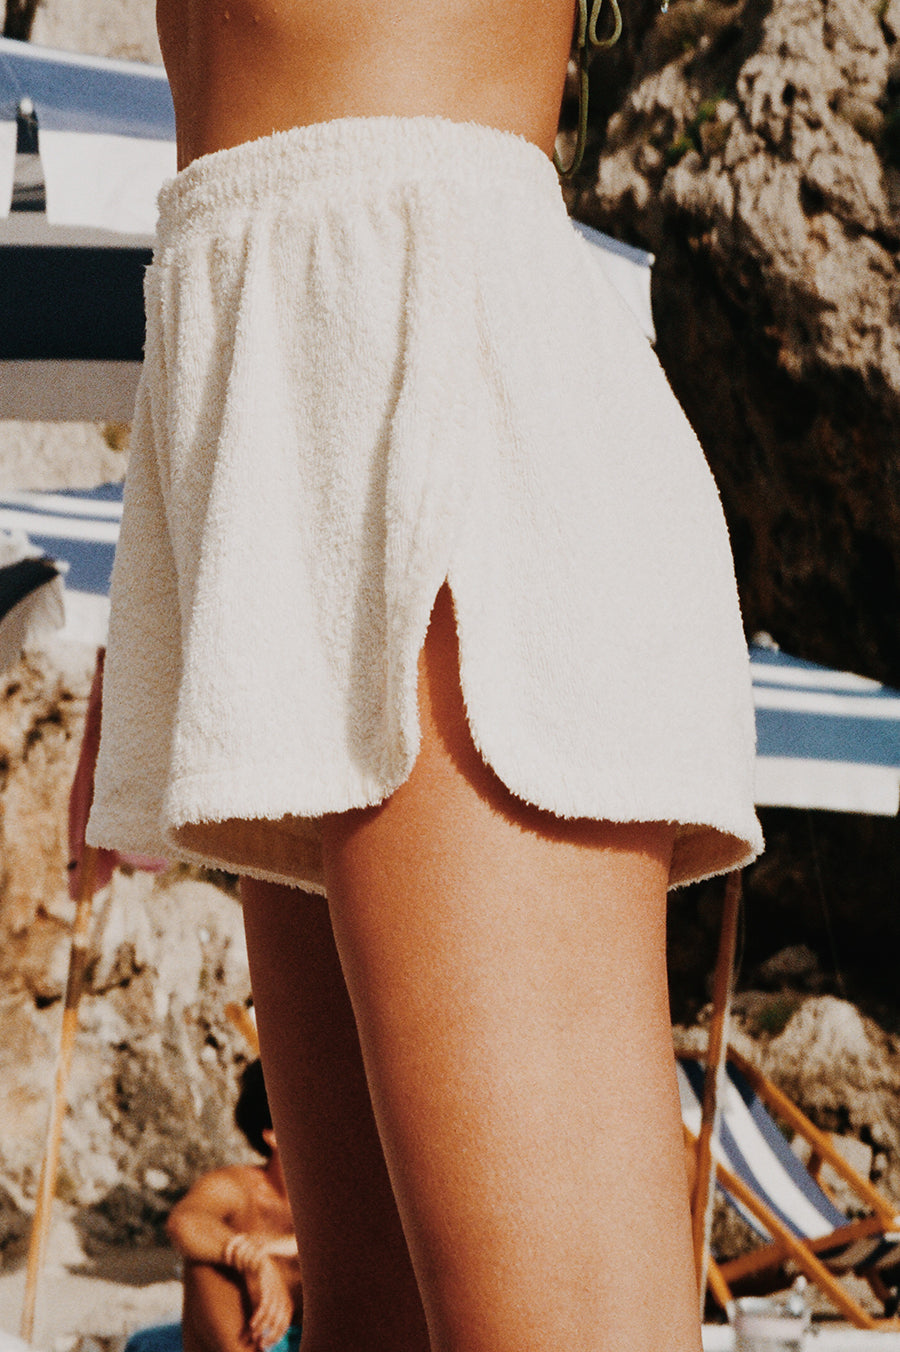 chanel beach towel